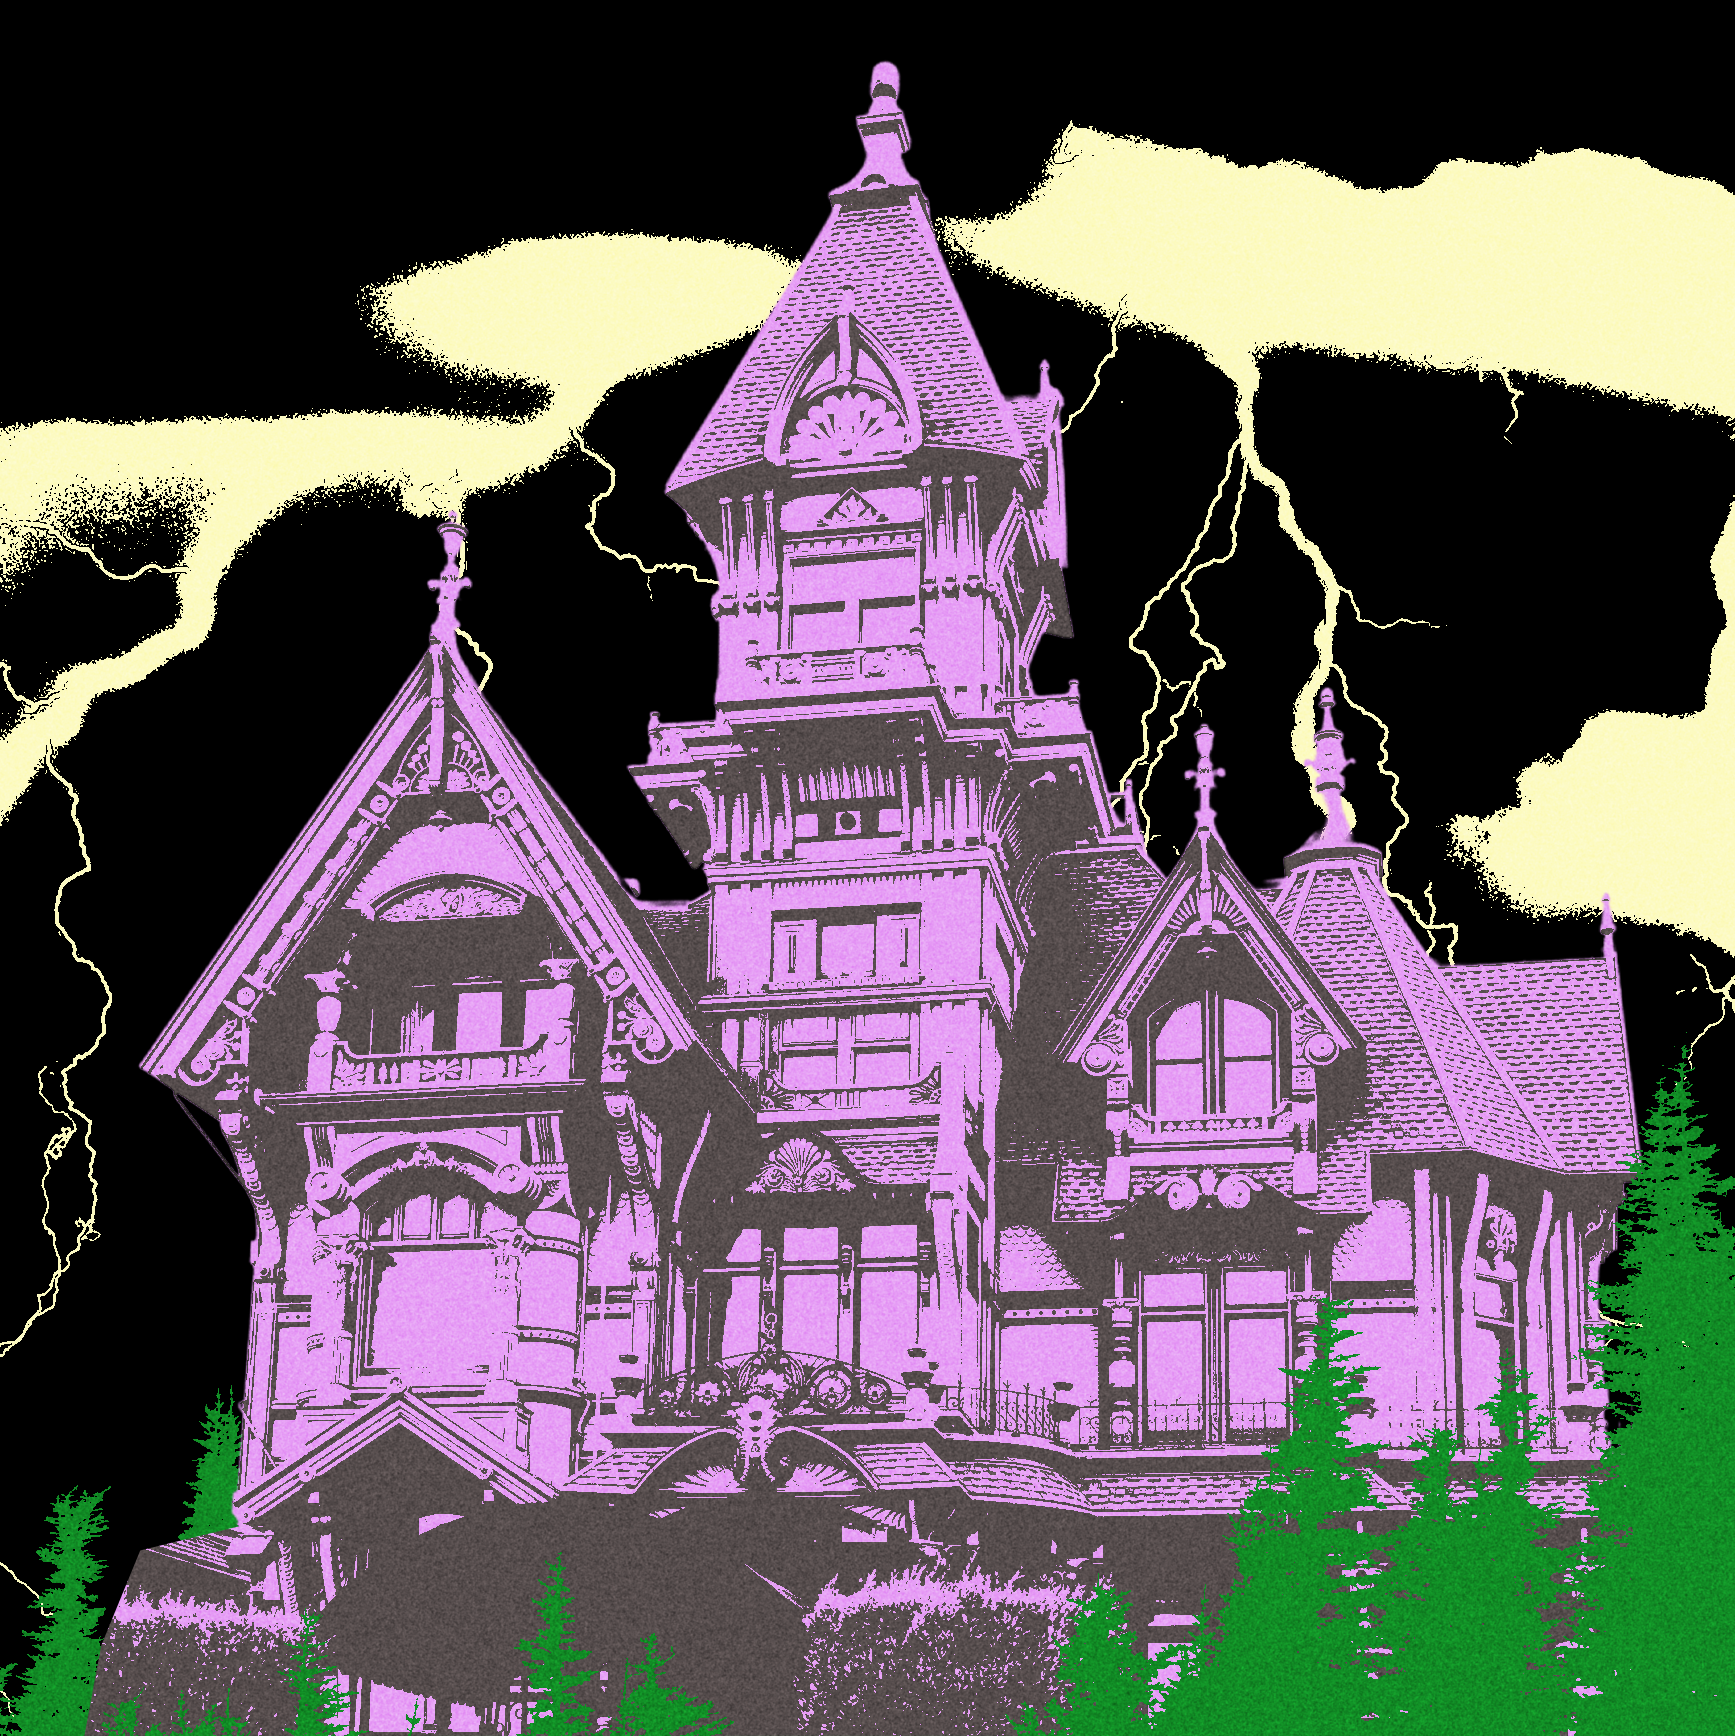 "eerie Haunted House Under Full Moonlight"